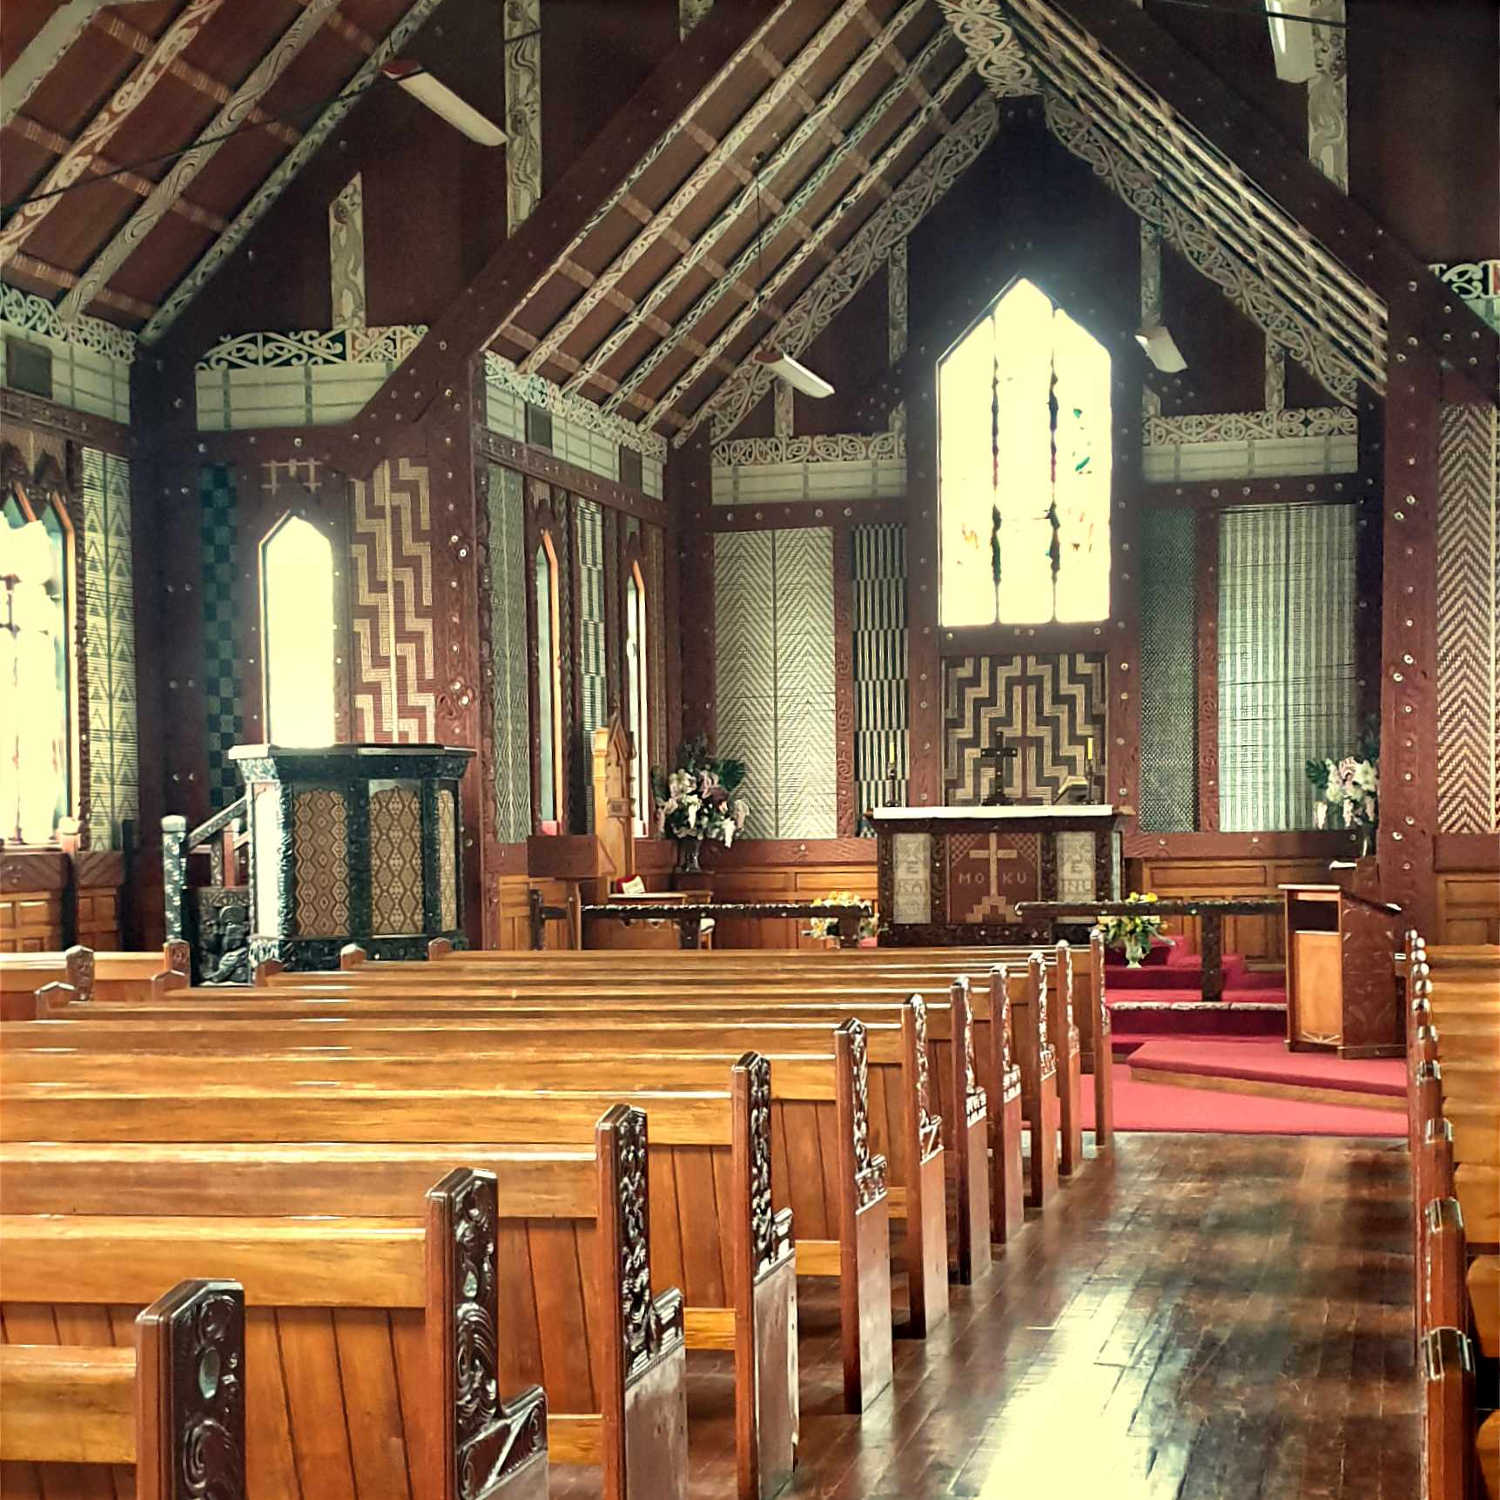 Tikitiki church interior, New Zealand